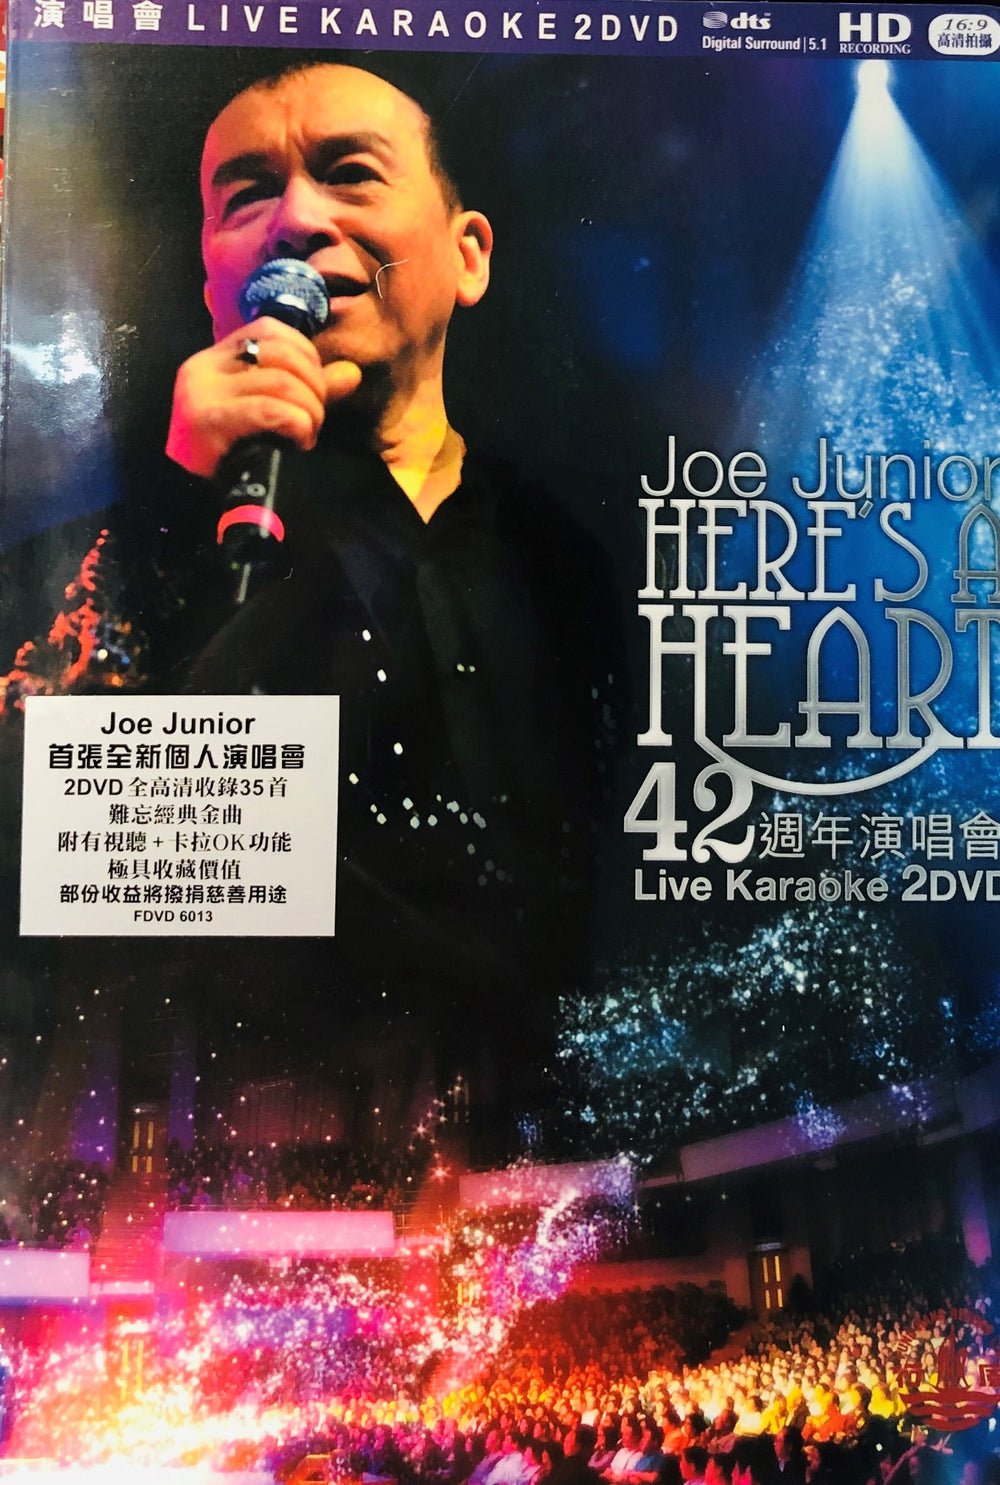 JOE JUNIOR - HERE'S A HEART 42 ANNIVERSARY LIVE KARAOKE (2DVD) REGION FREE